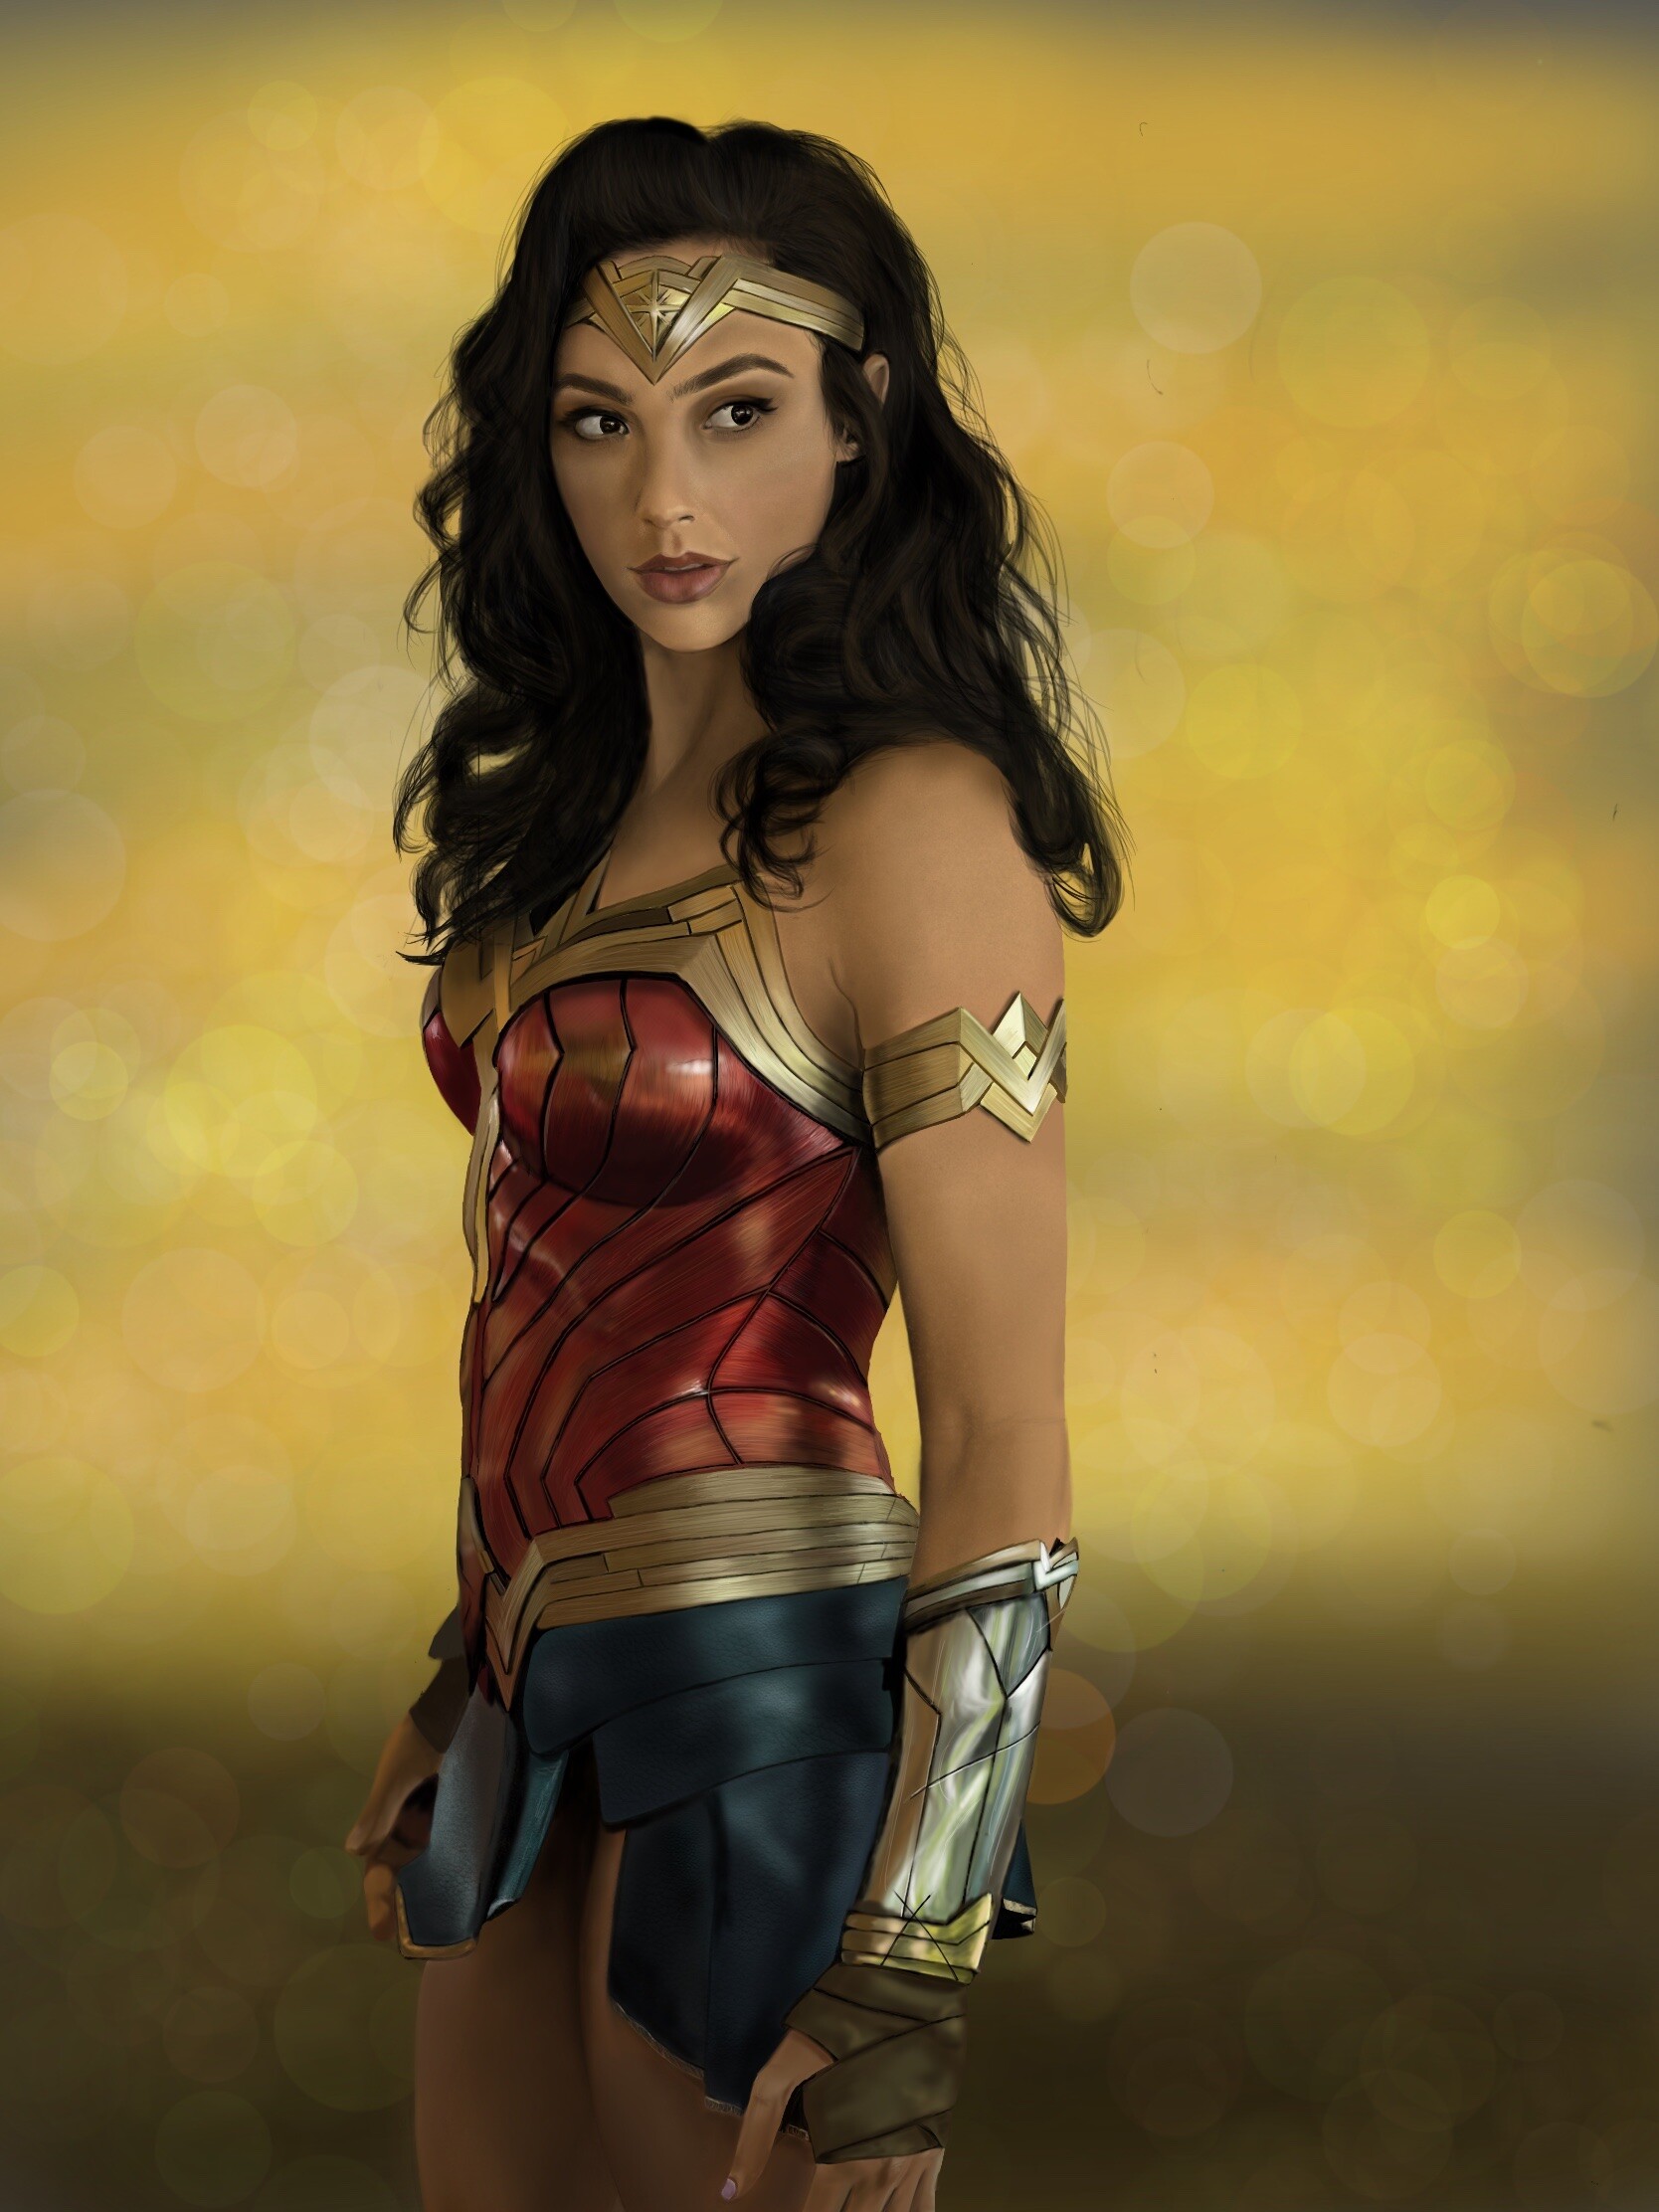 ArtStation - Wonder Woman Digital Portrait